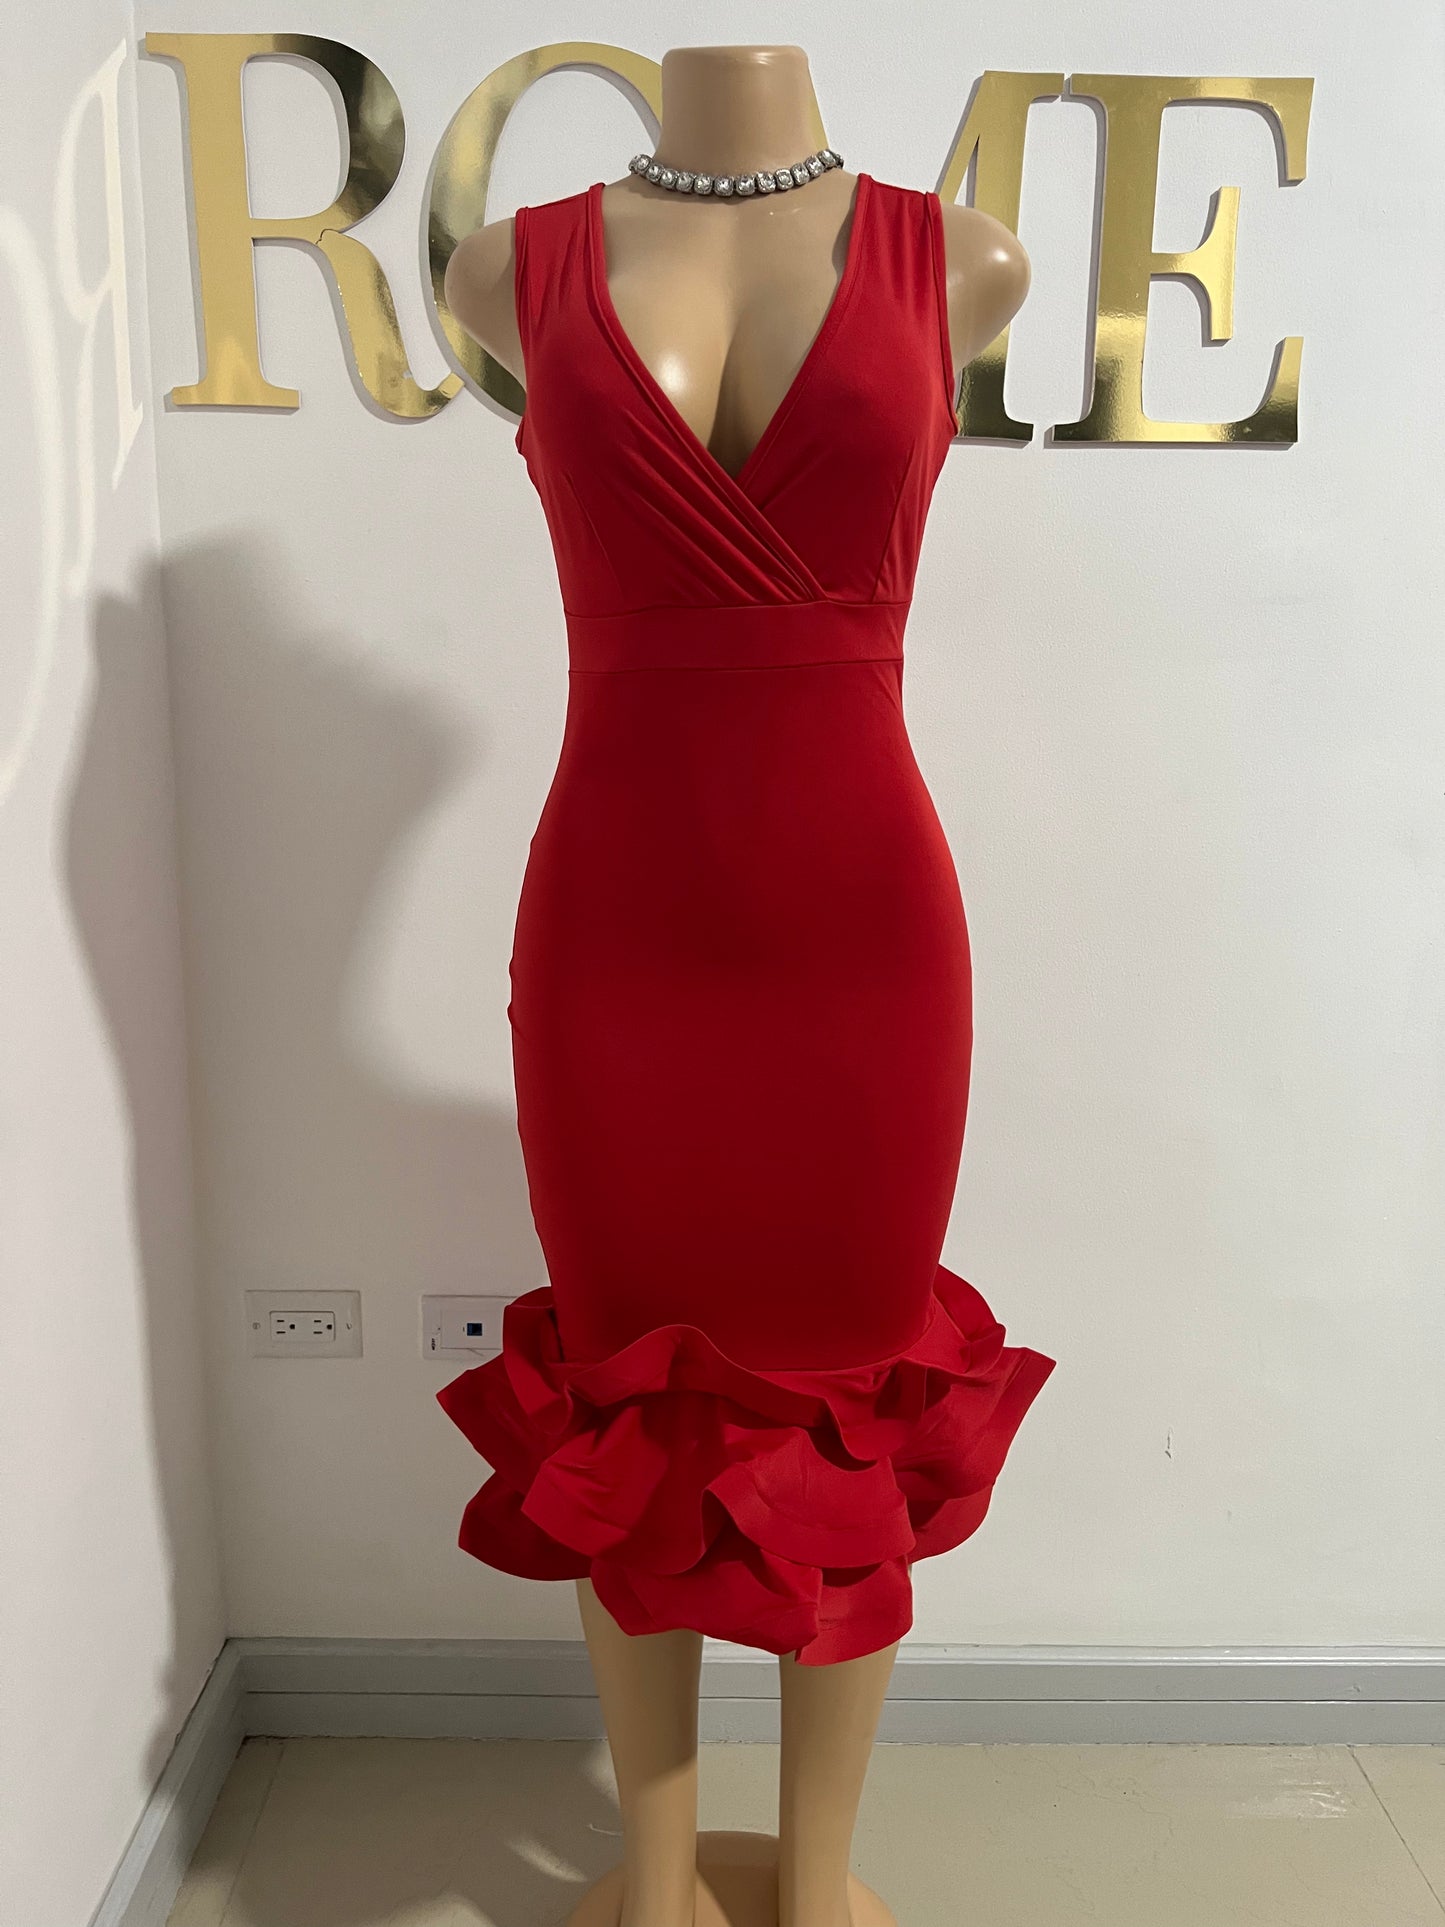 Sharon Slay Dress (Red)